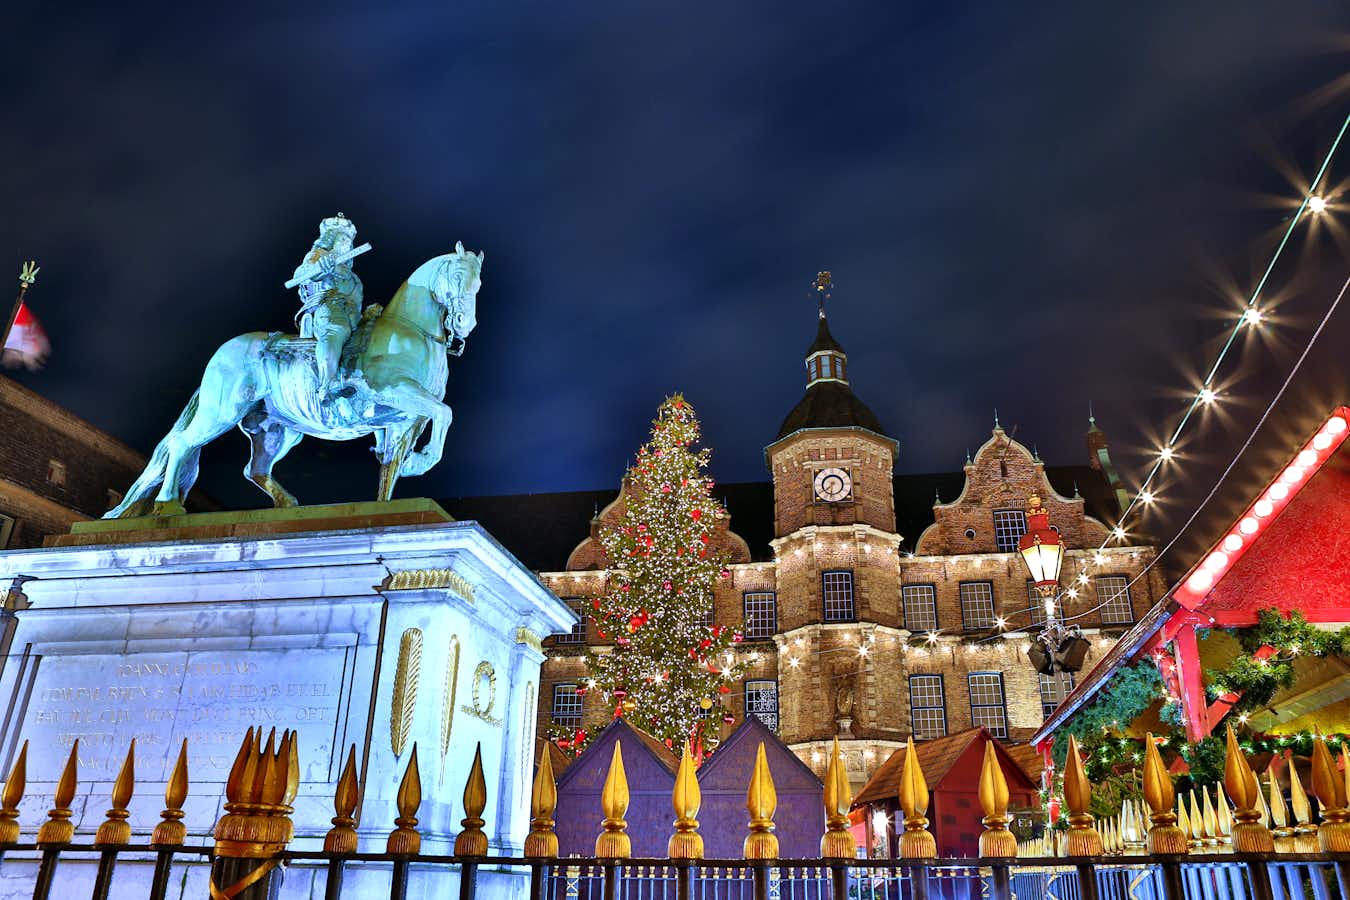 tourhub | Shearings | 4-Star Düsseldorf, Bonn and Cologne Christmas Markets 